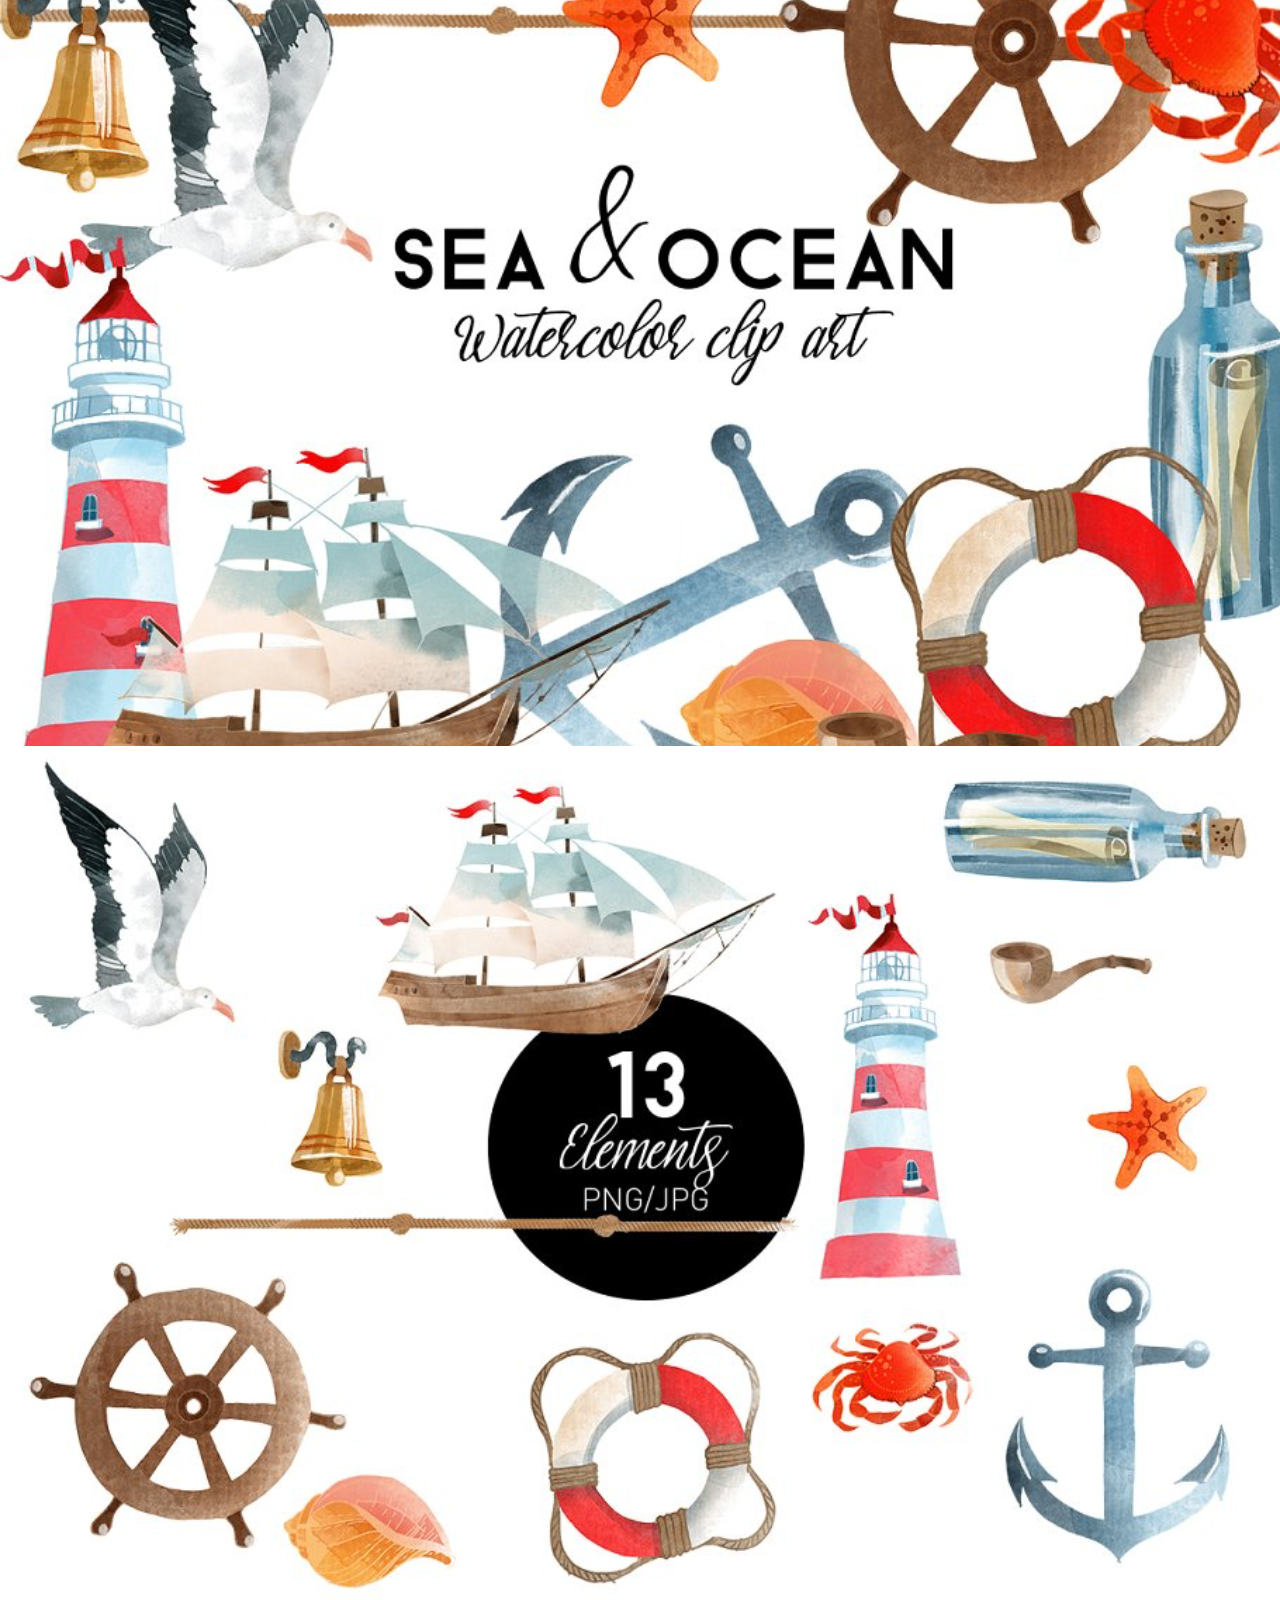 Sea ocean. watercolor clip art pinterest image preview.